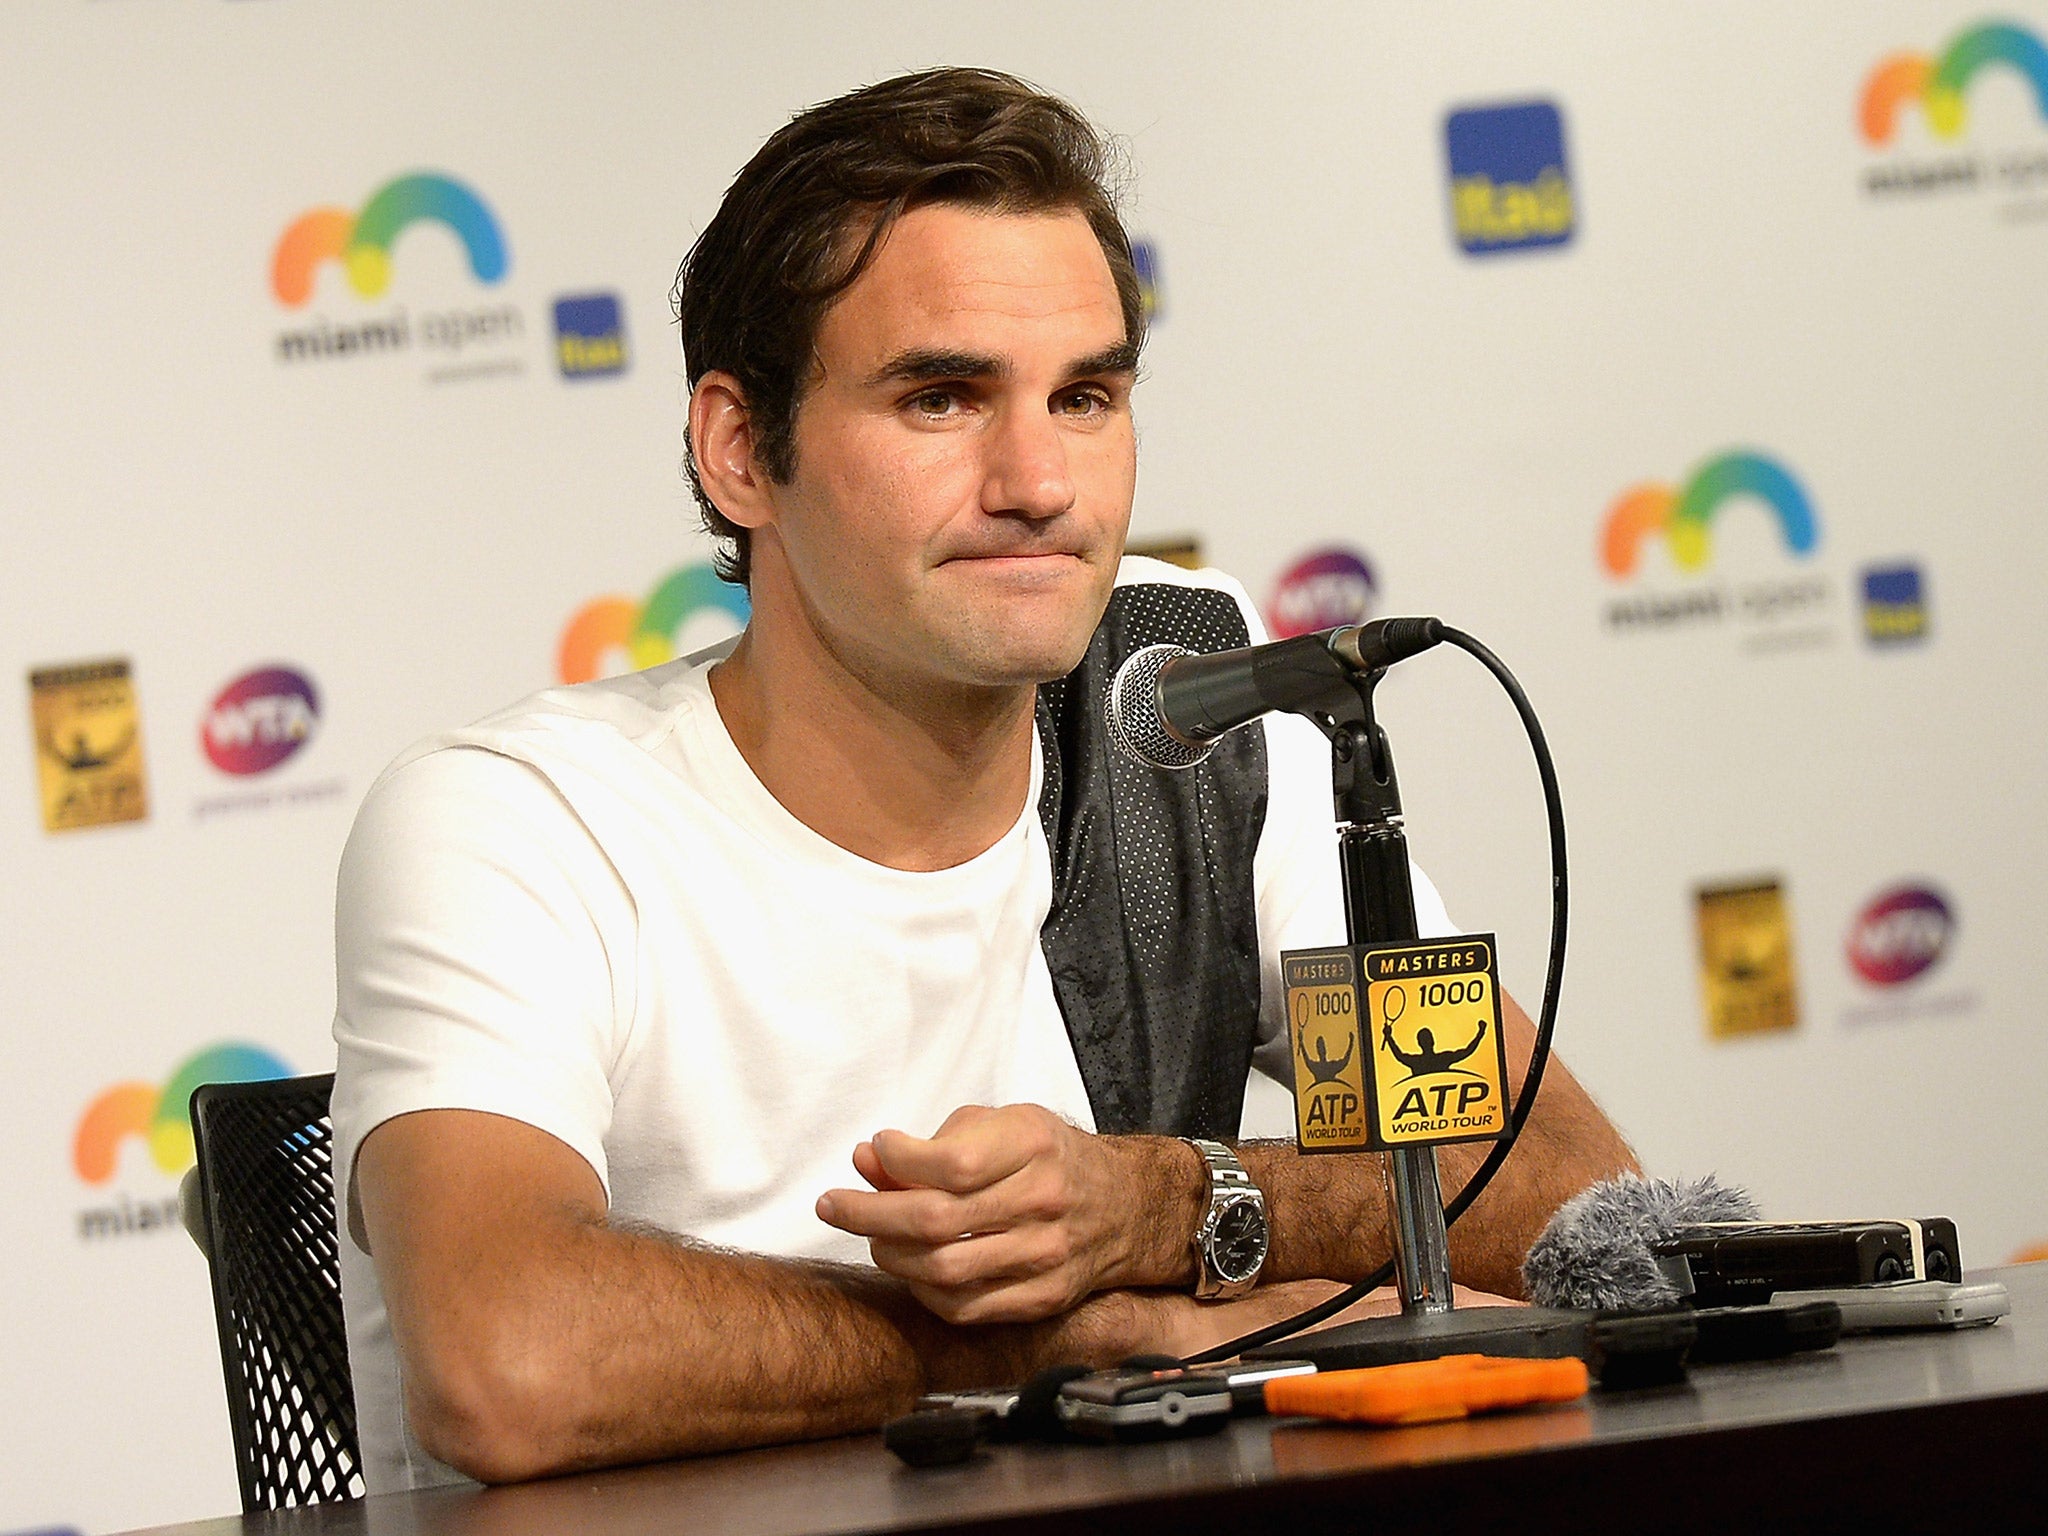 Roger Federer has revealed the reasoning behind his knee injury last month